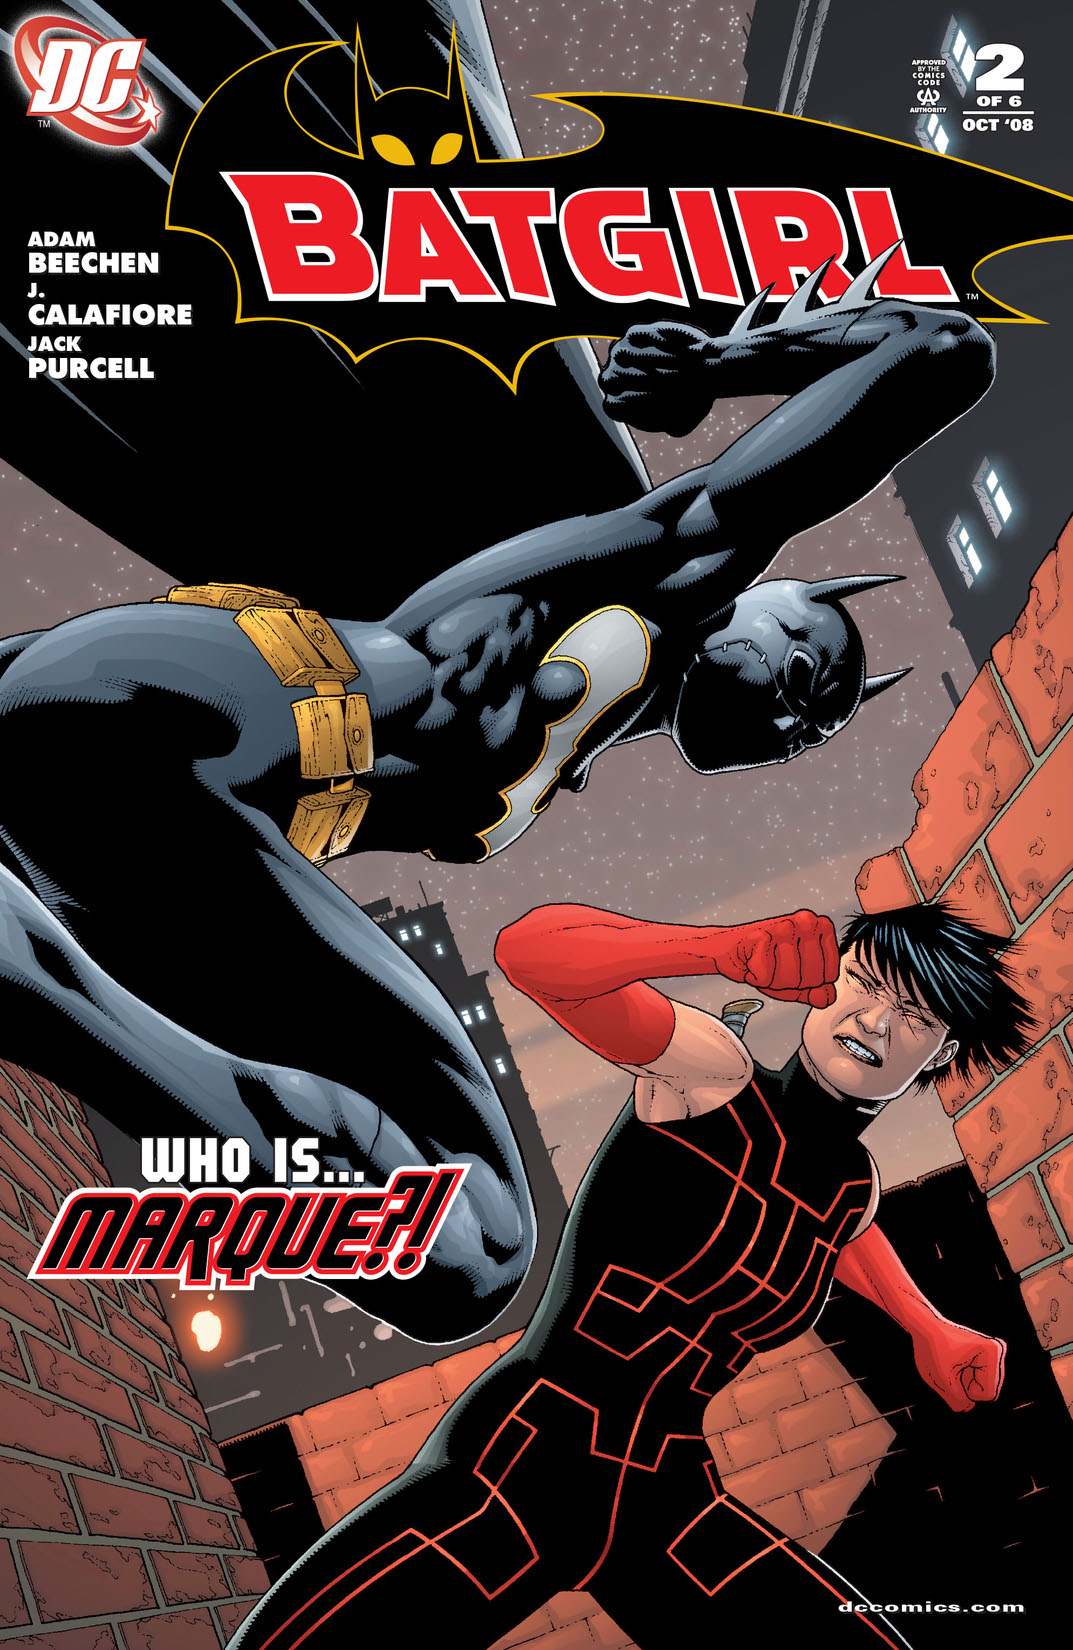 Batgirl (2008-) #2 preview images